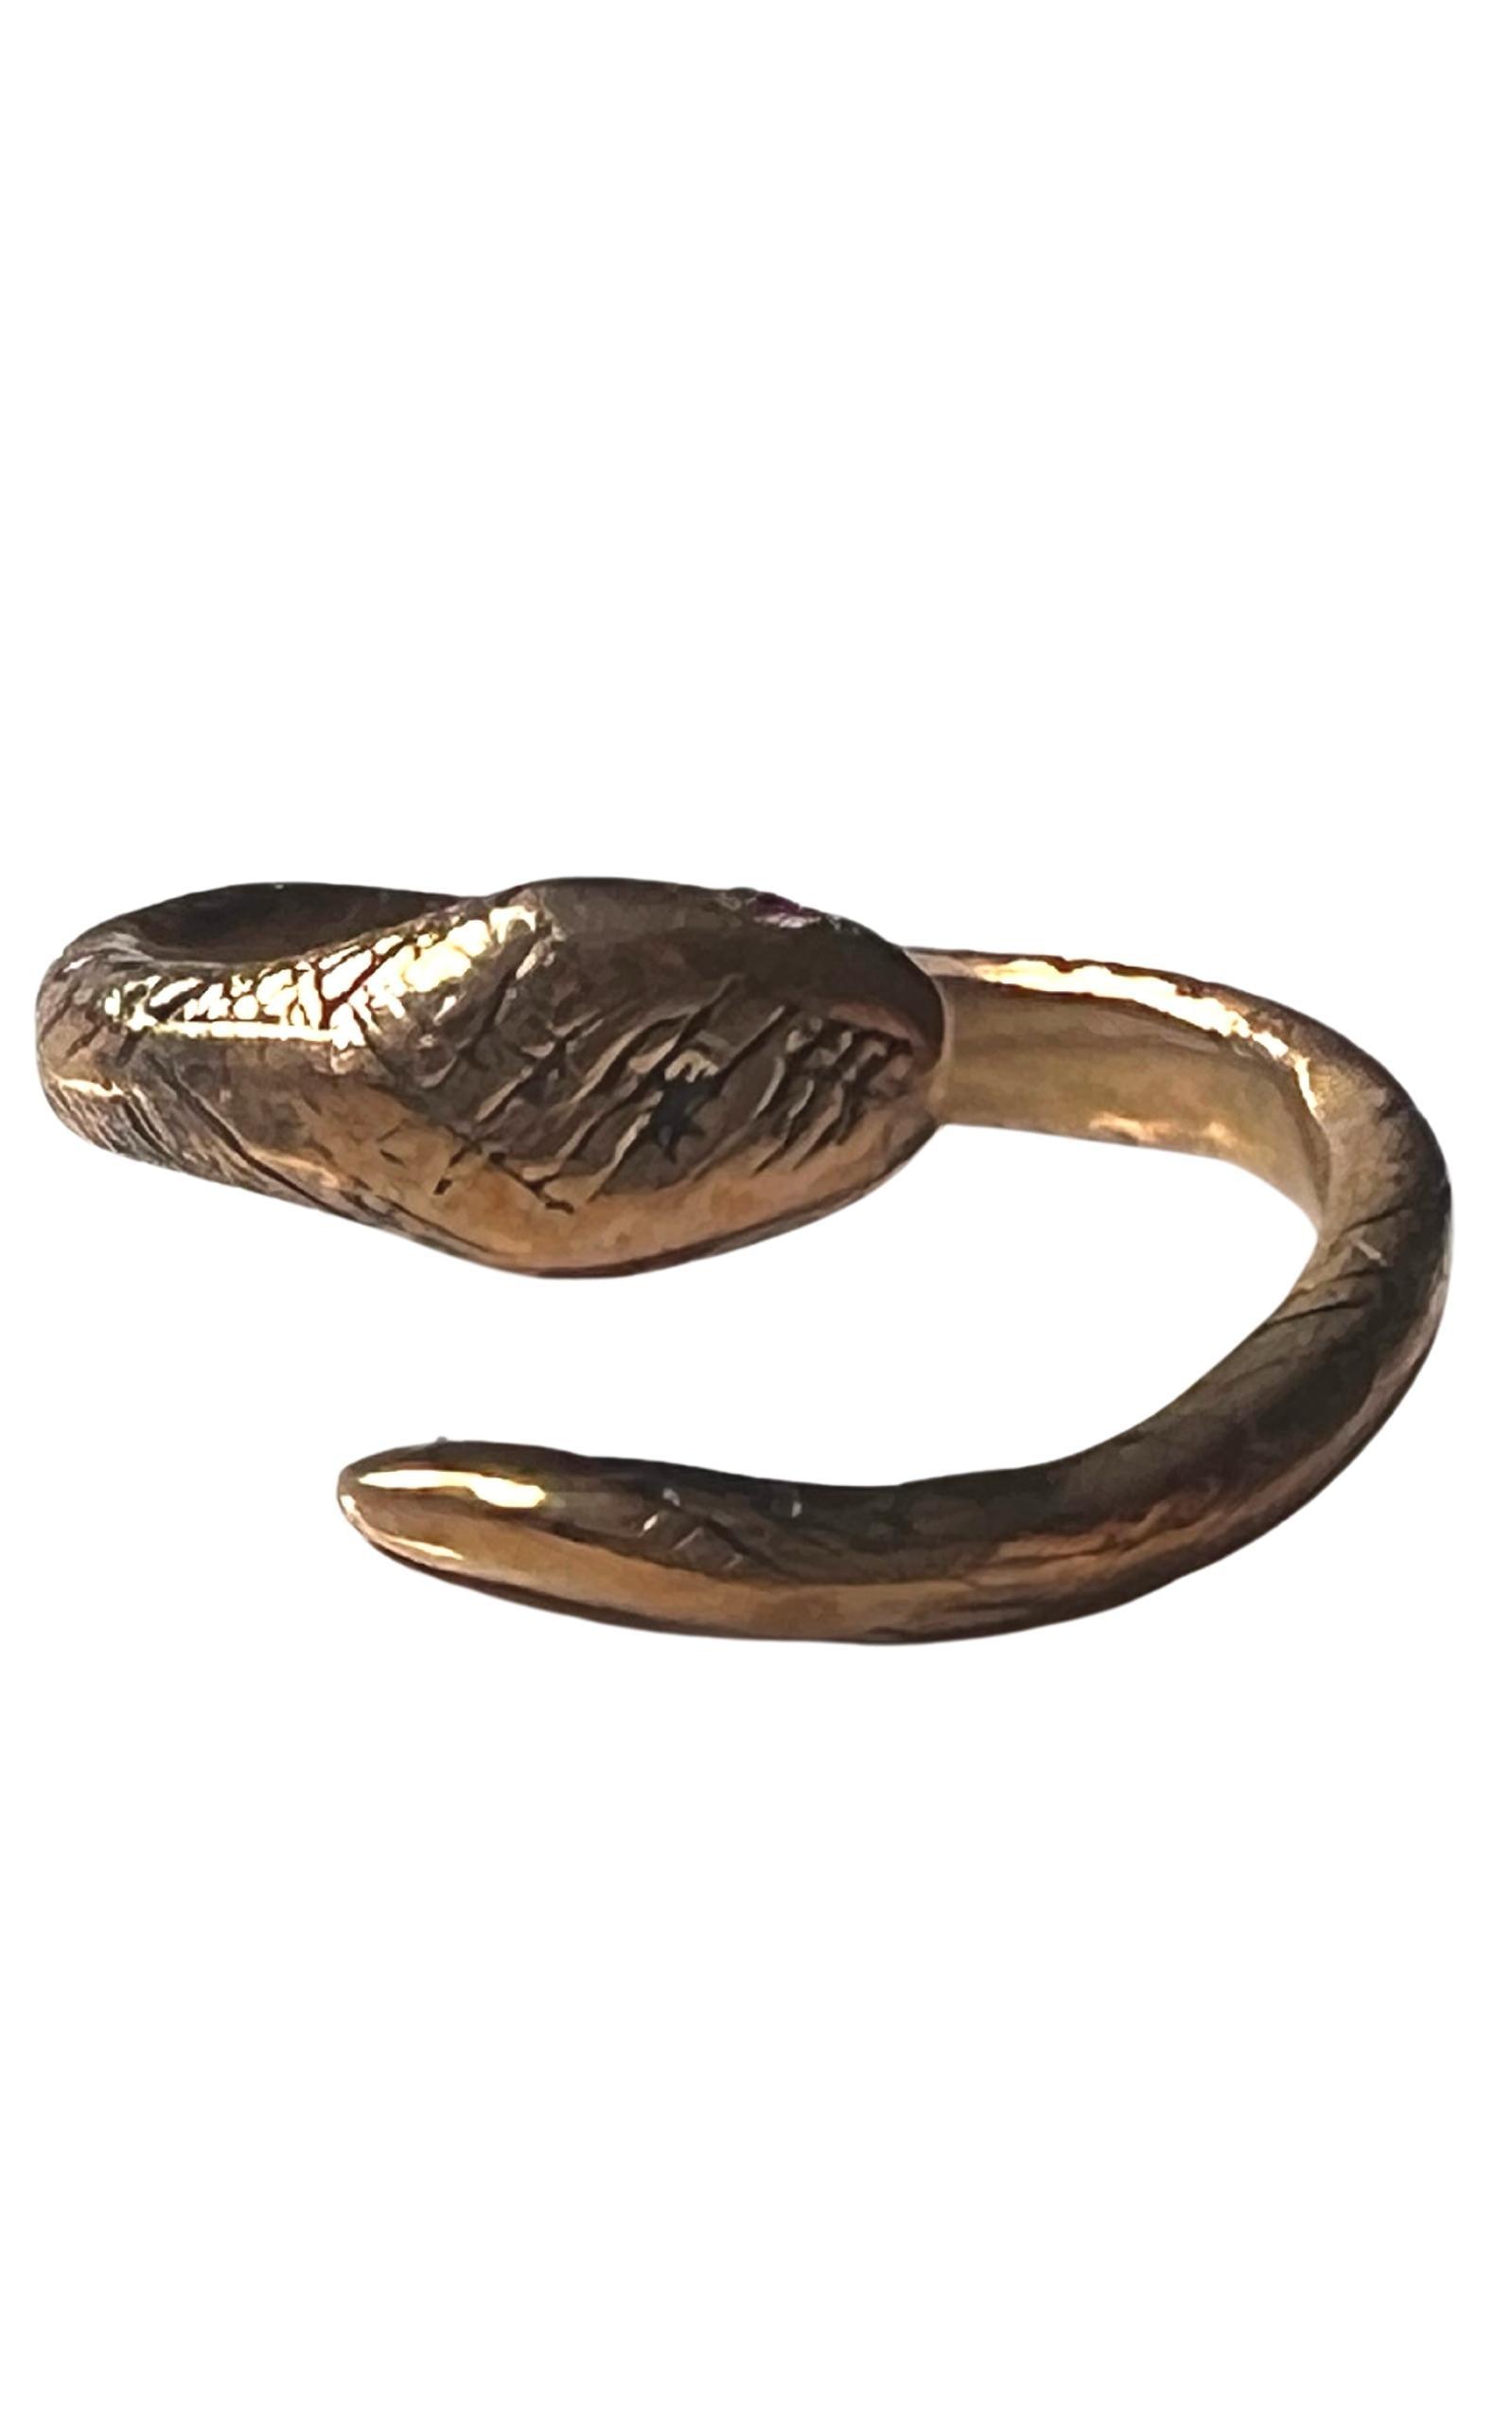  J DauphinRuby Snake Ring Bronze Adjustable - Runway Catalog